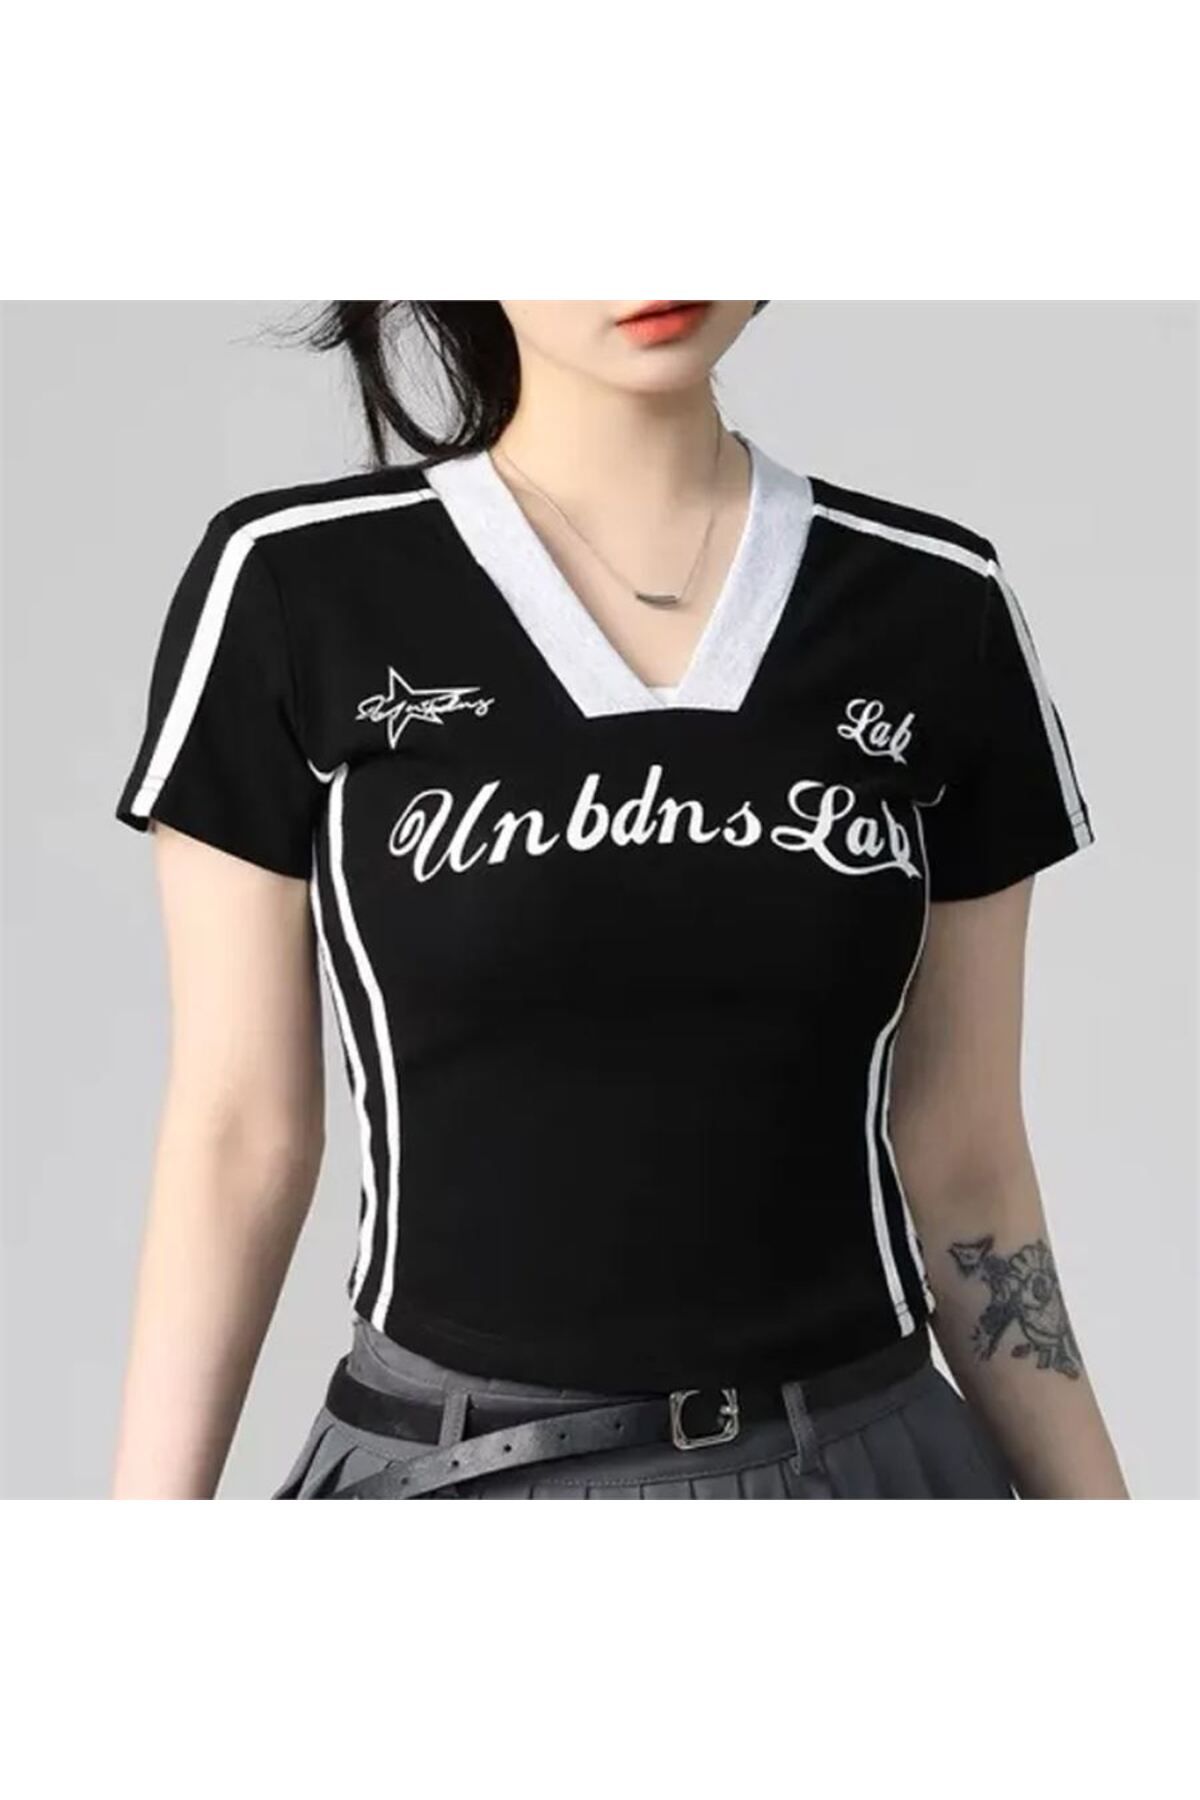 Lab Black Uniform Unbdns Gofeel Trendyol T-Shirt Half -